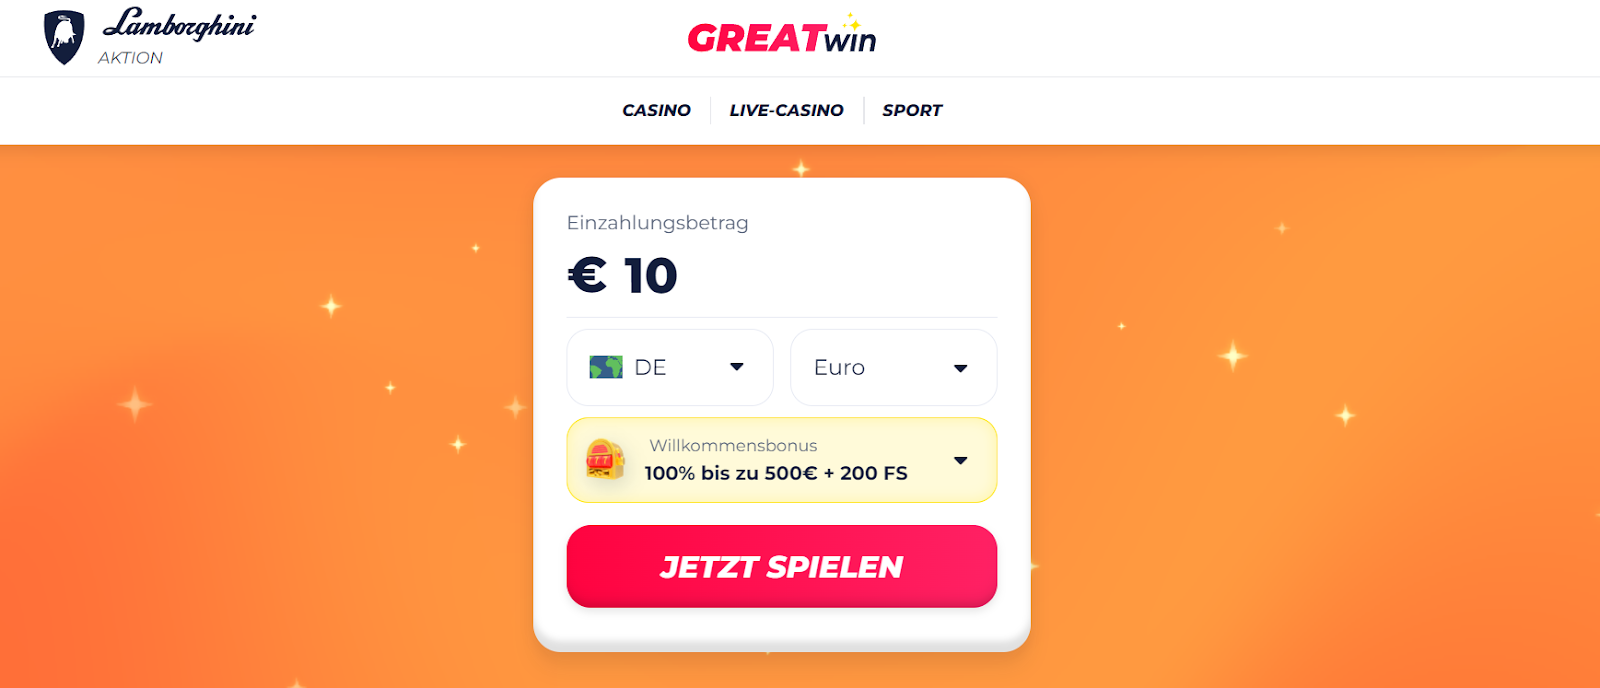 greatwin casino, online casino